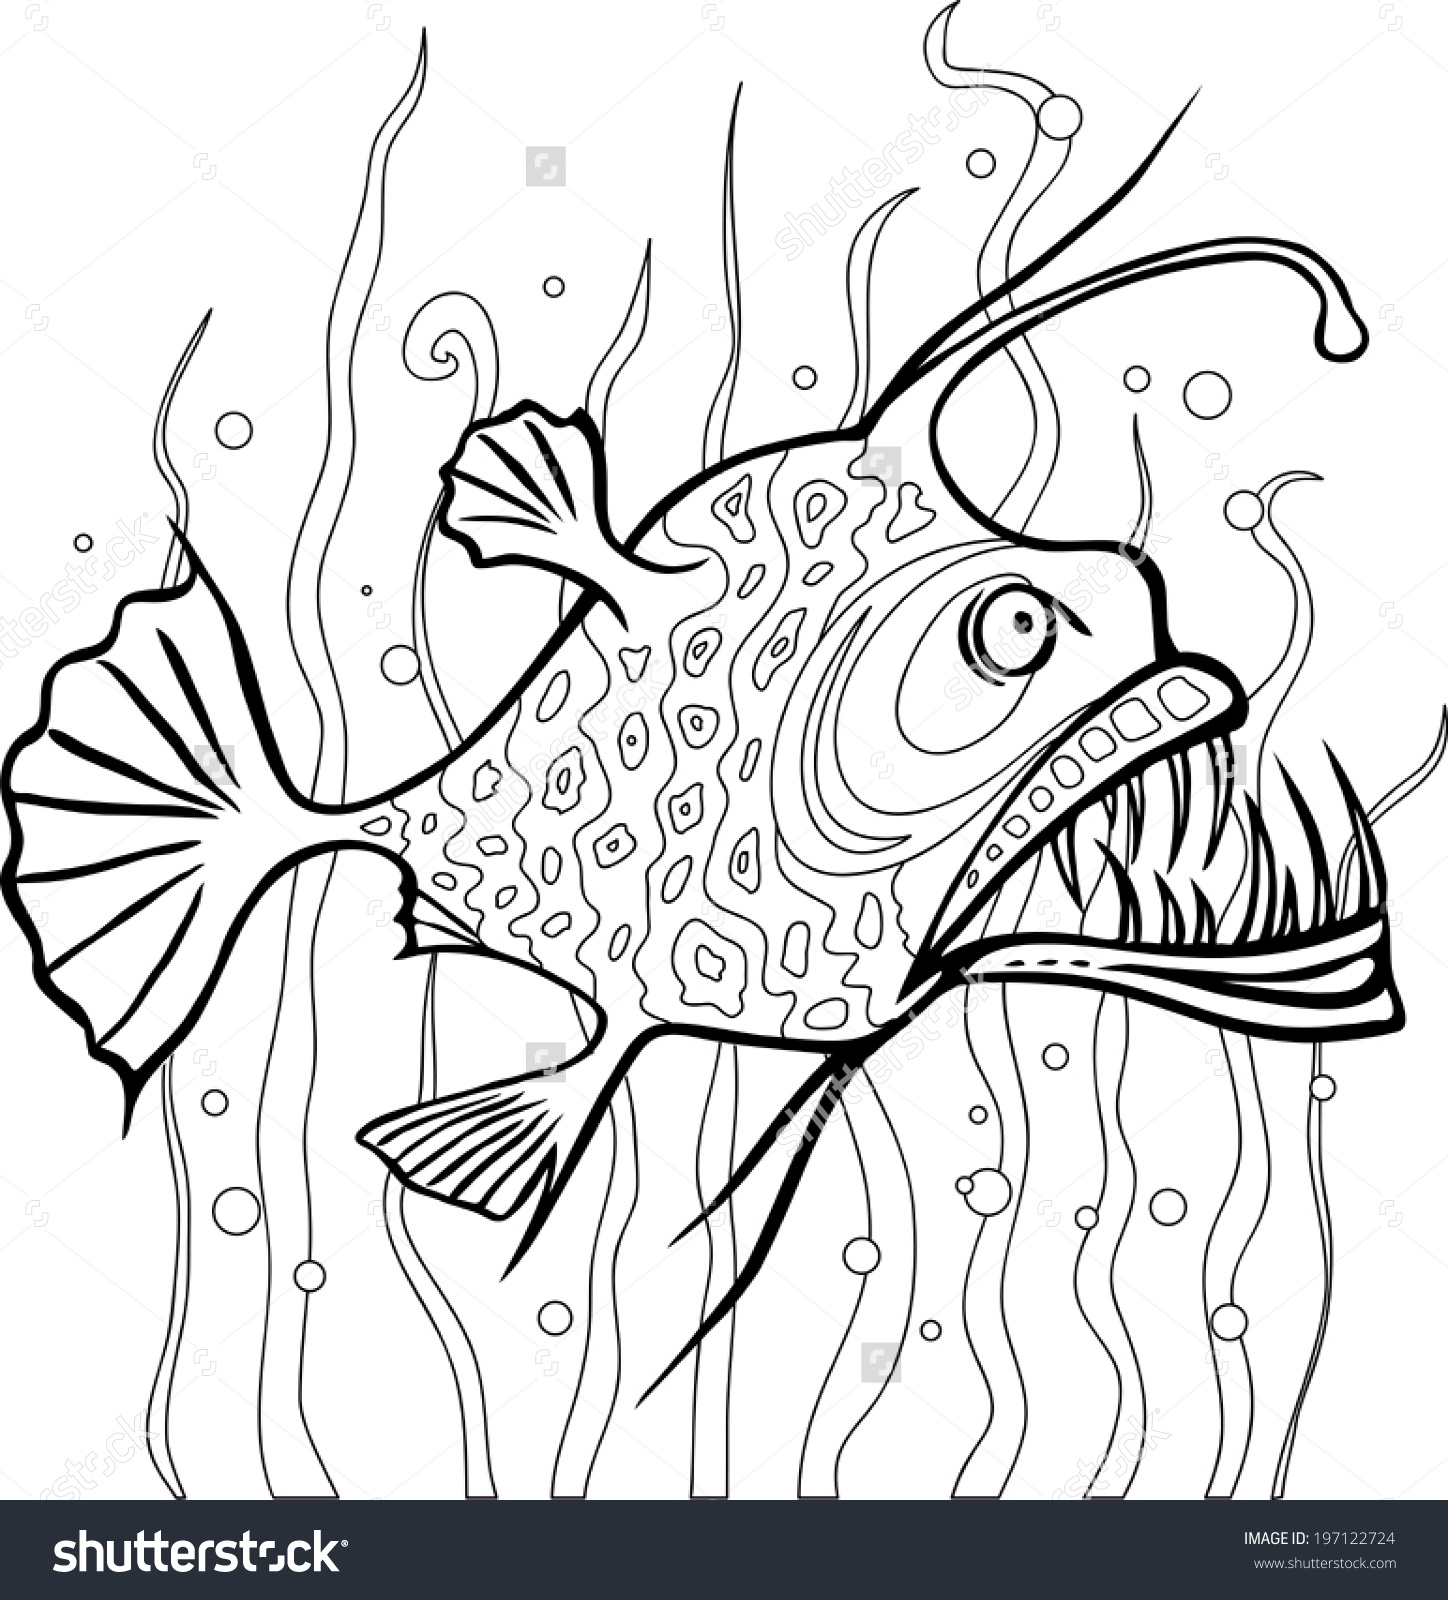 Anglerfish coloring #11, Download drawings